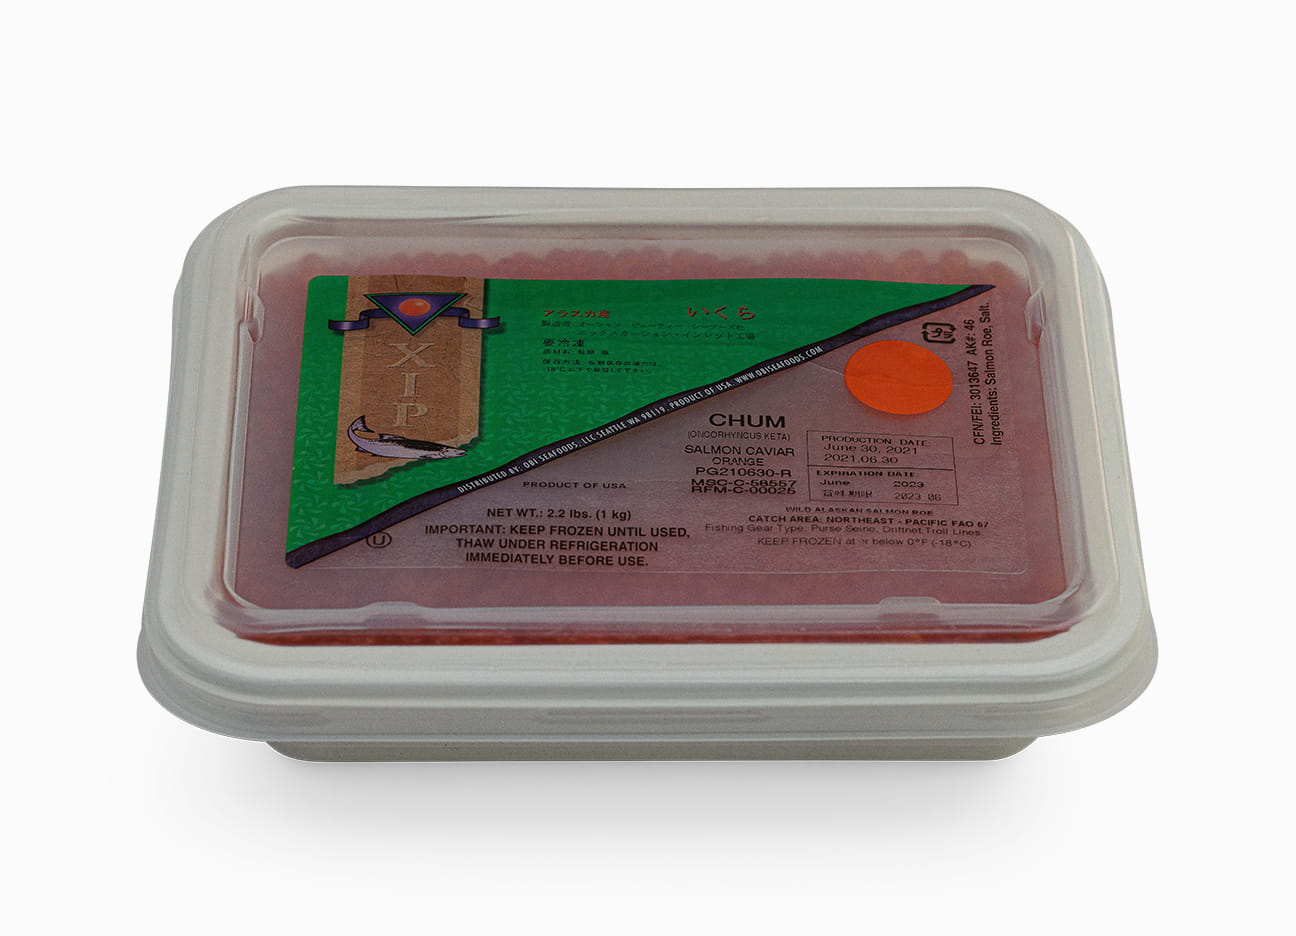 Wild Alaskan Chum Salmon Caviar XIP (Grade Orange) 35.2 oz in a closed package.